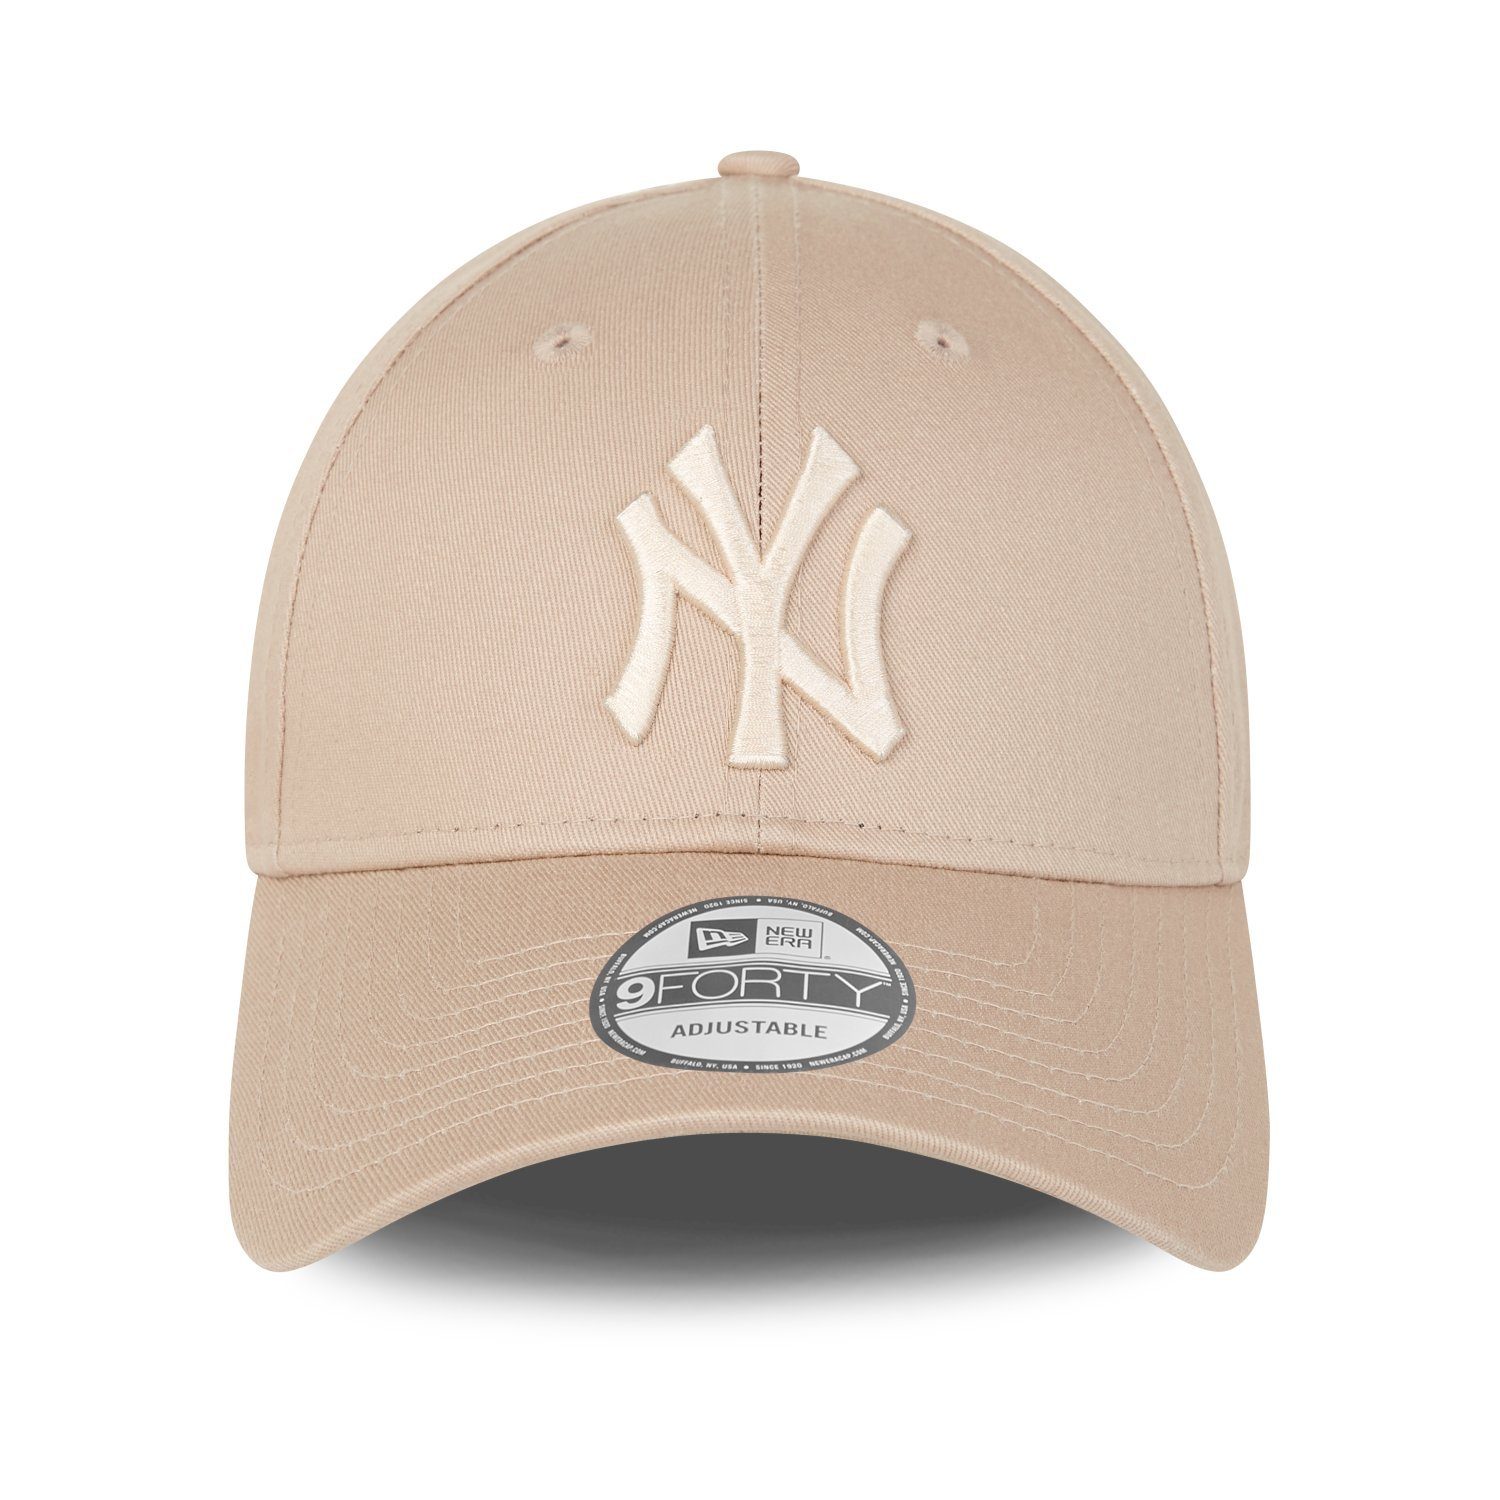 New Strapback 9Forty York Baseball New Cap Era Yankees